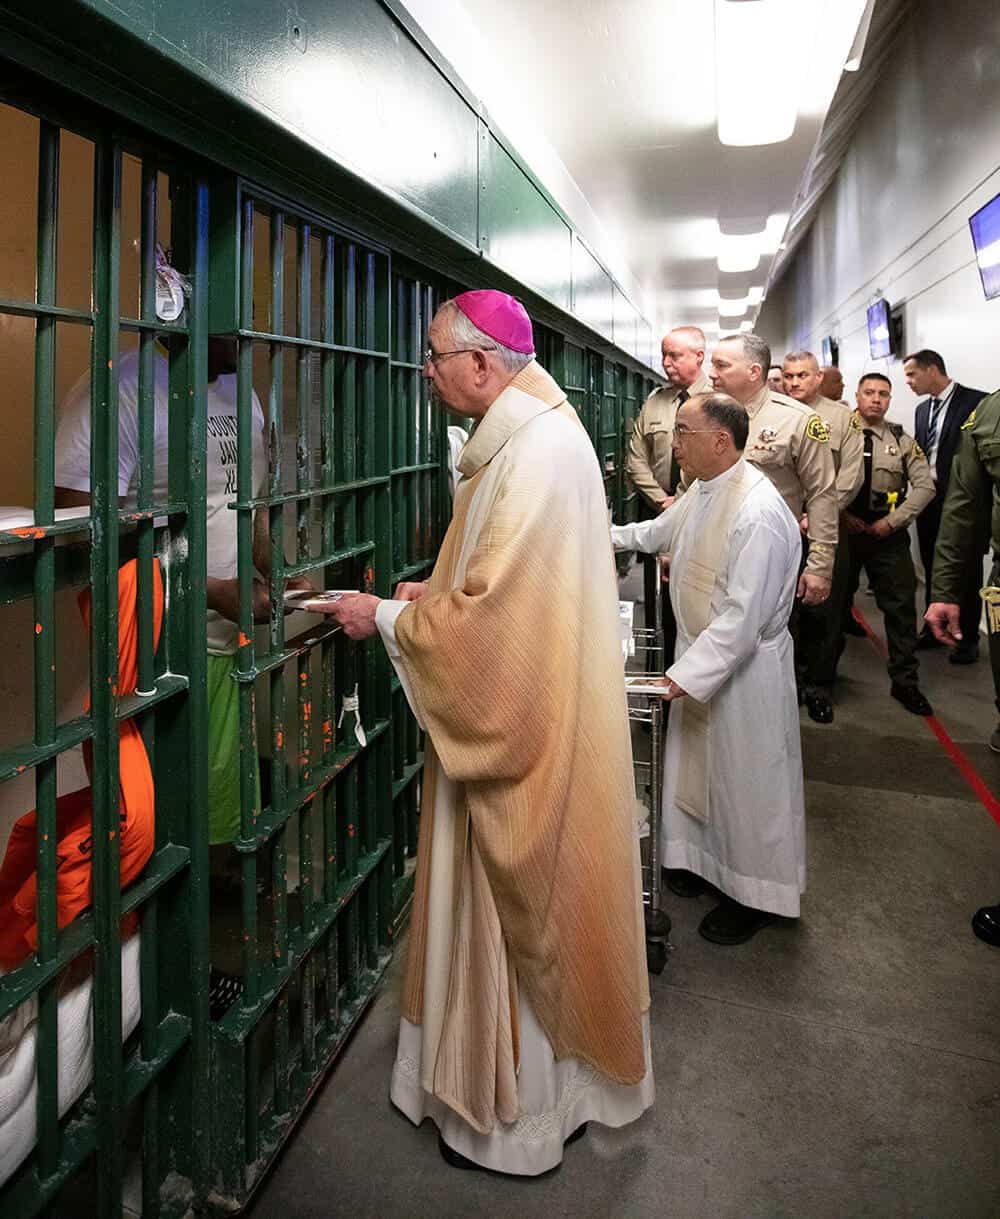 Archbishop José H. Gomez visits the Men’s Central Jail on Christmas Day